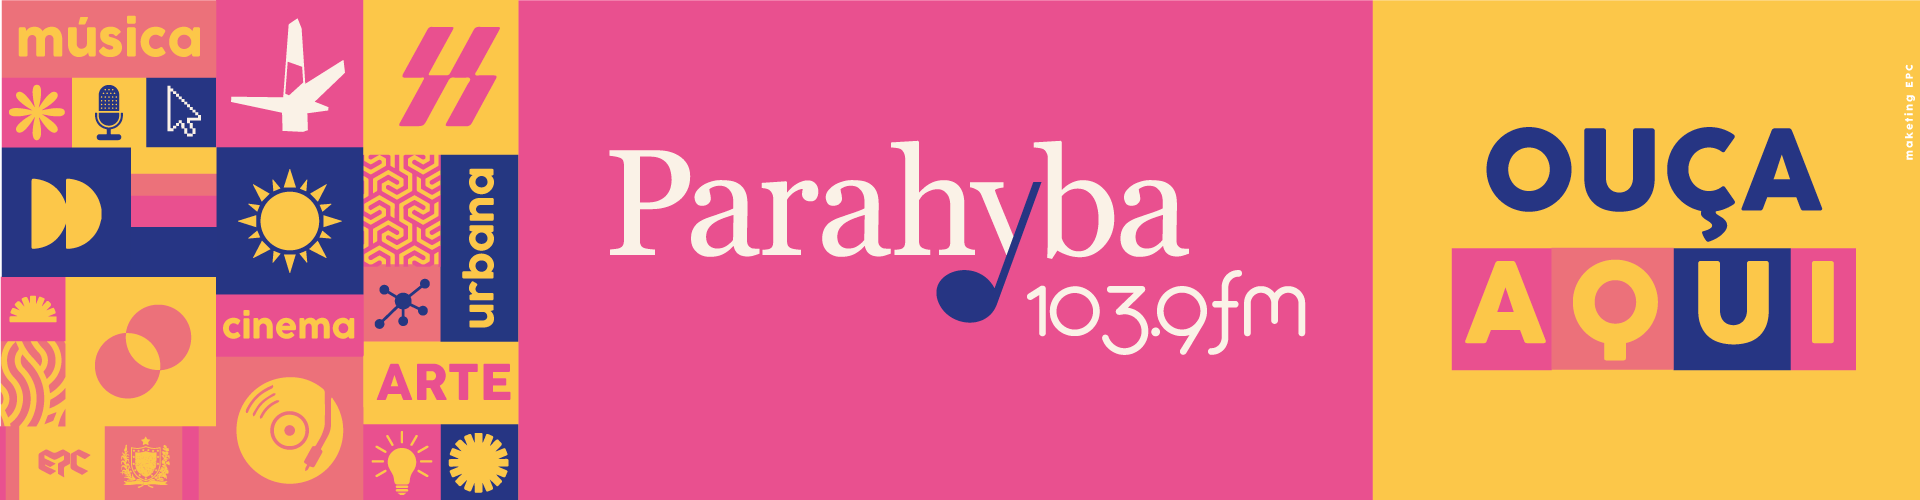 Parahyba FM